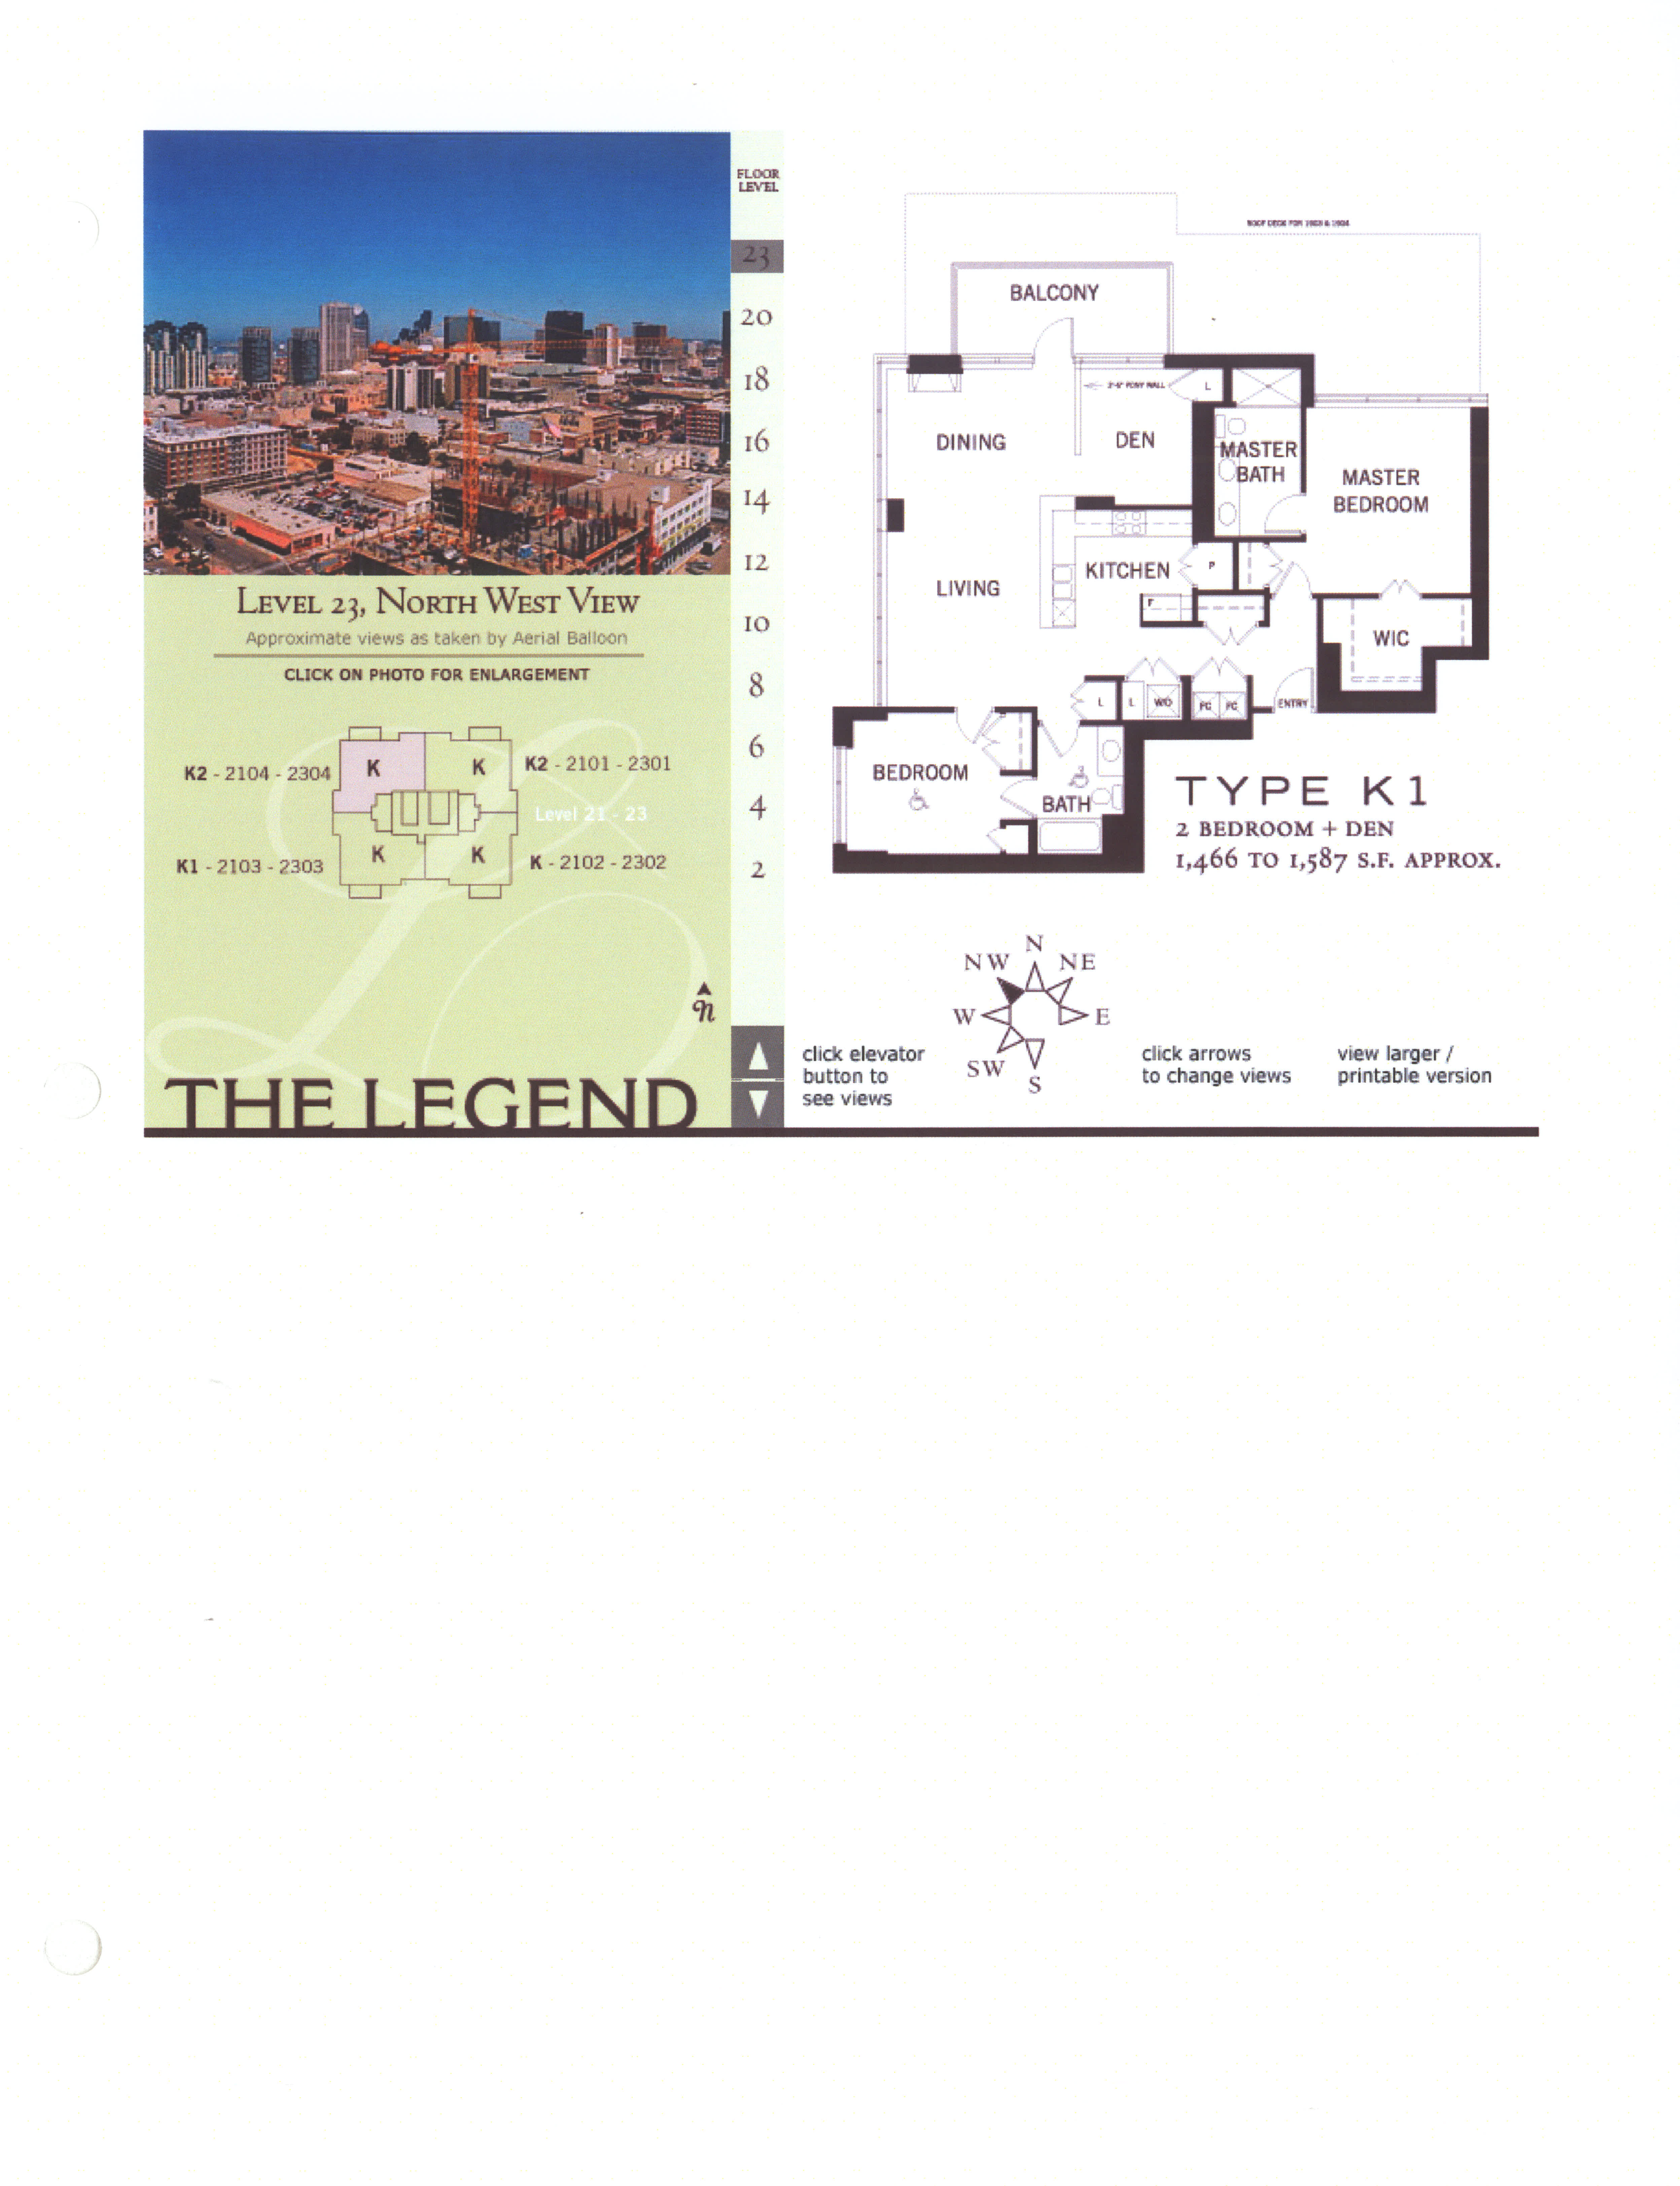 The Legend Floor Plan Level 23, North West View – Type K1